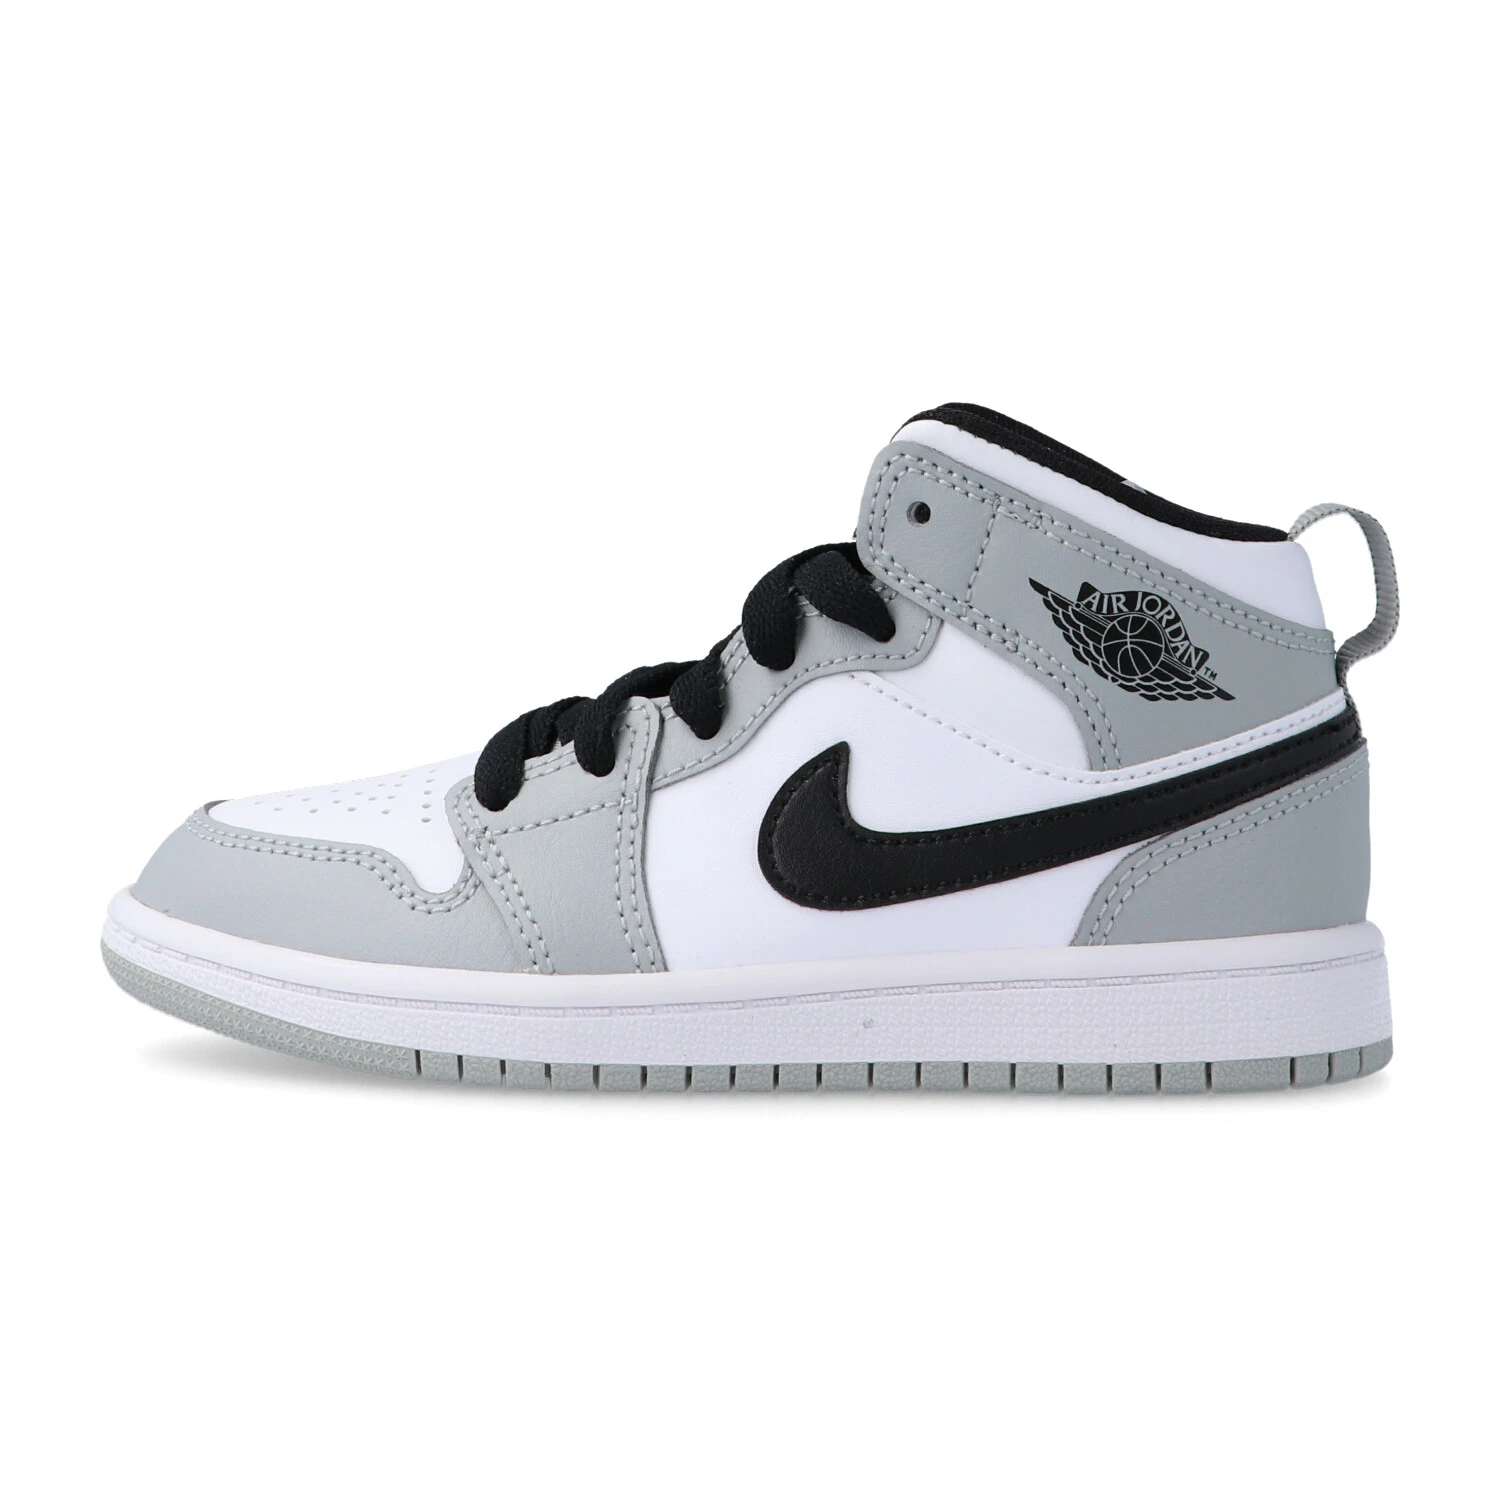 Nike Jordan 1 mid (ps) | eBay